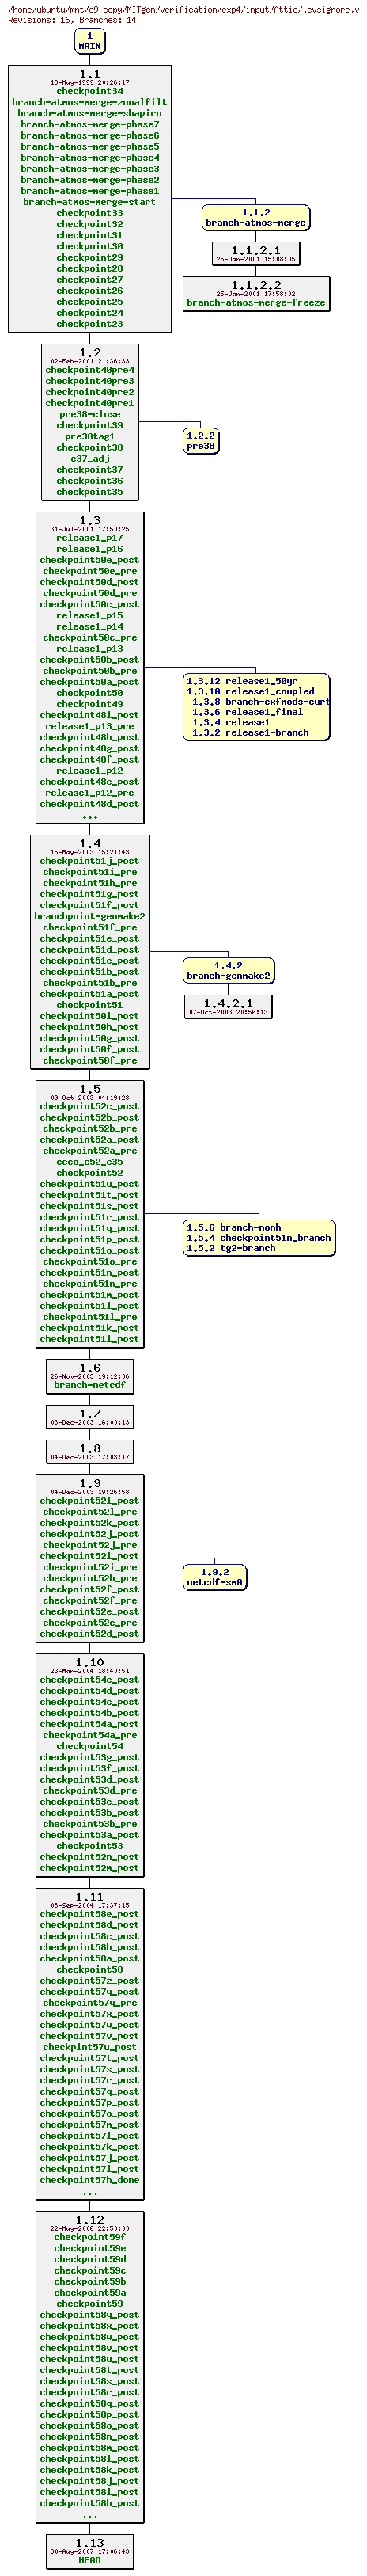 Revisions of MITgcm/verification/exp4/input/.cvsignore